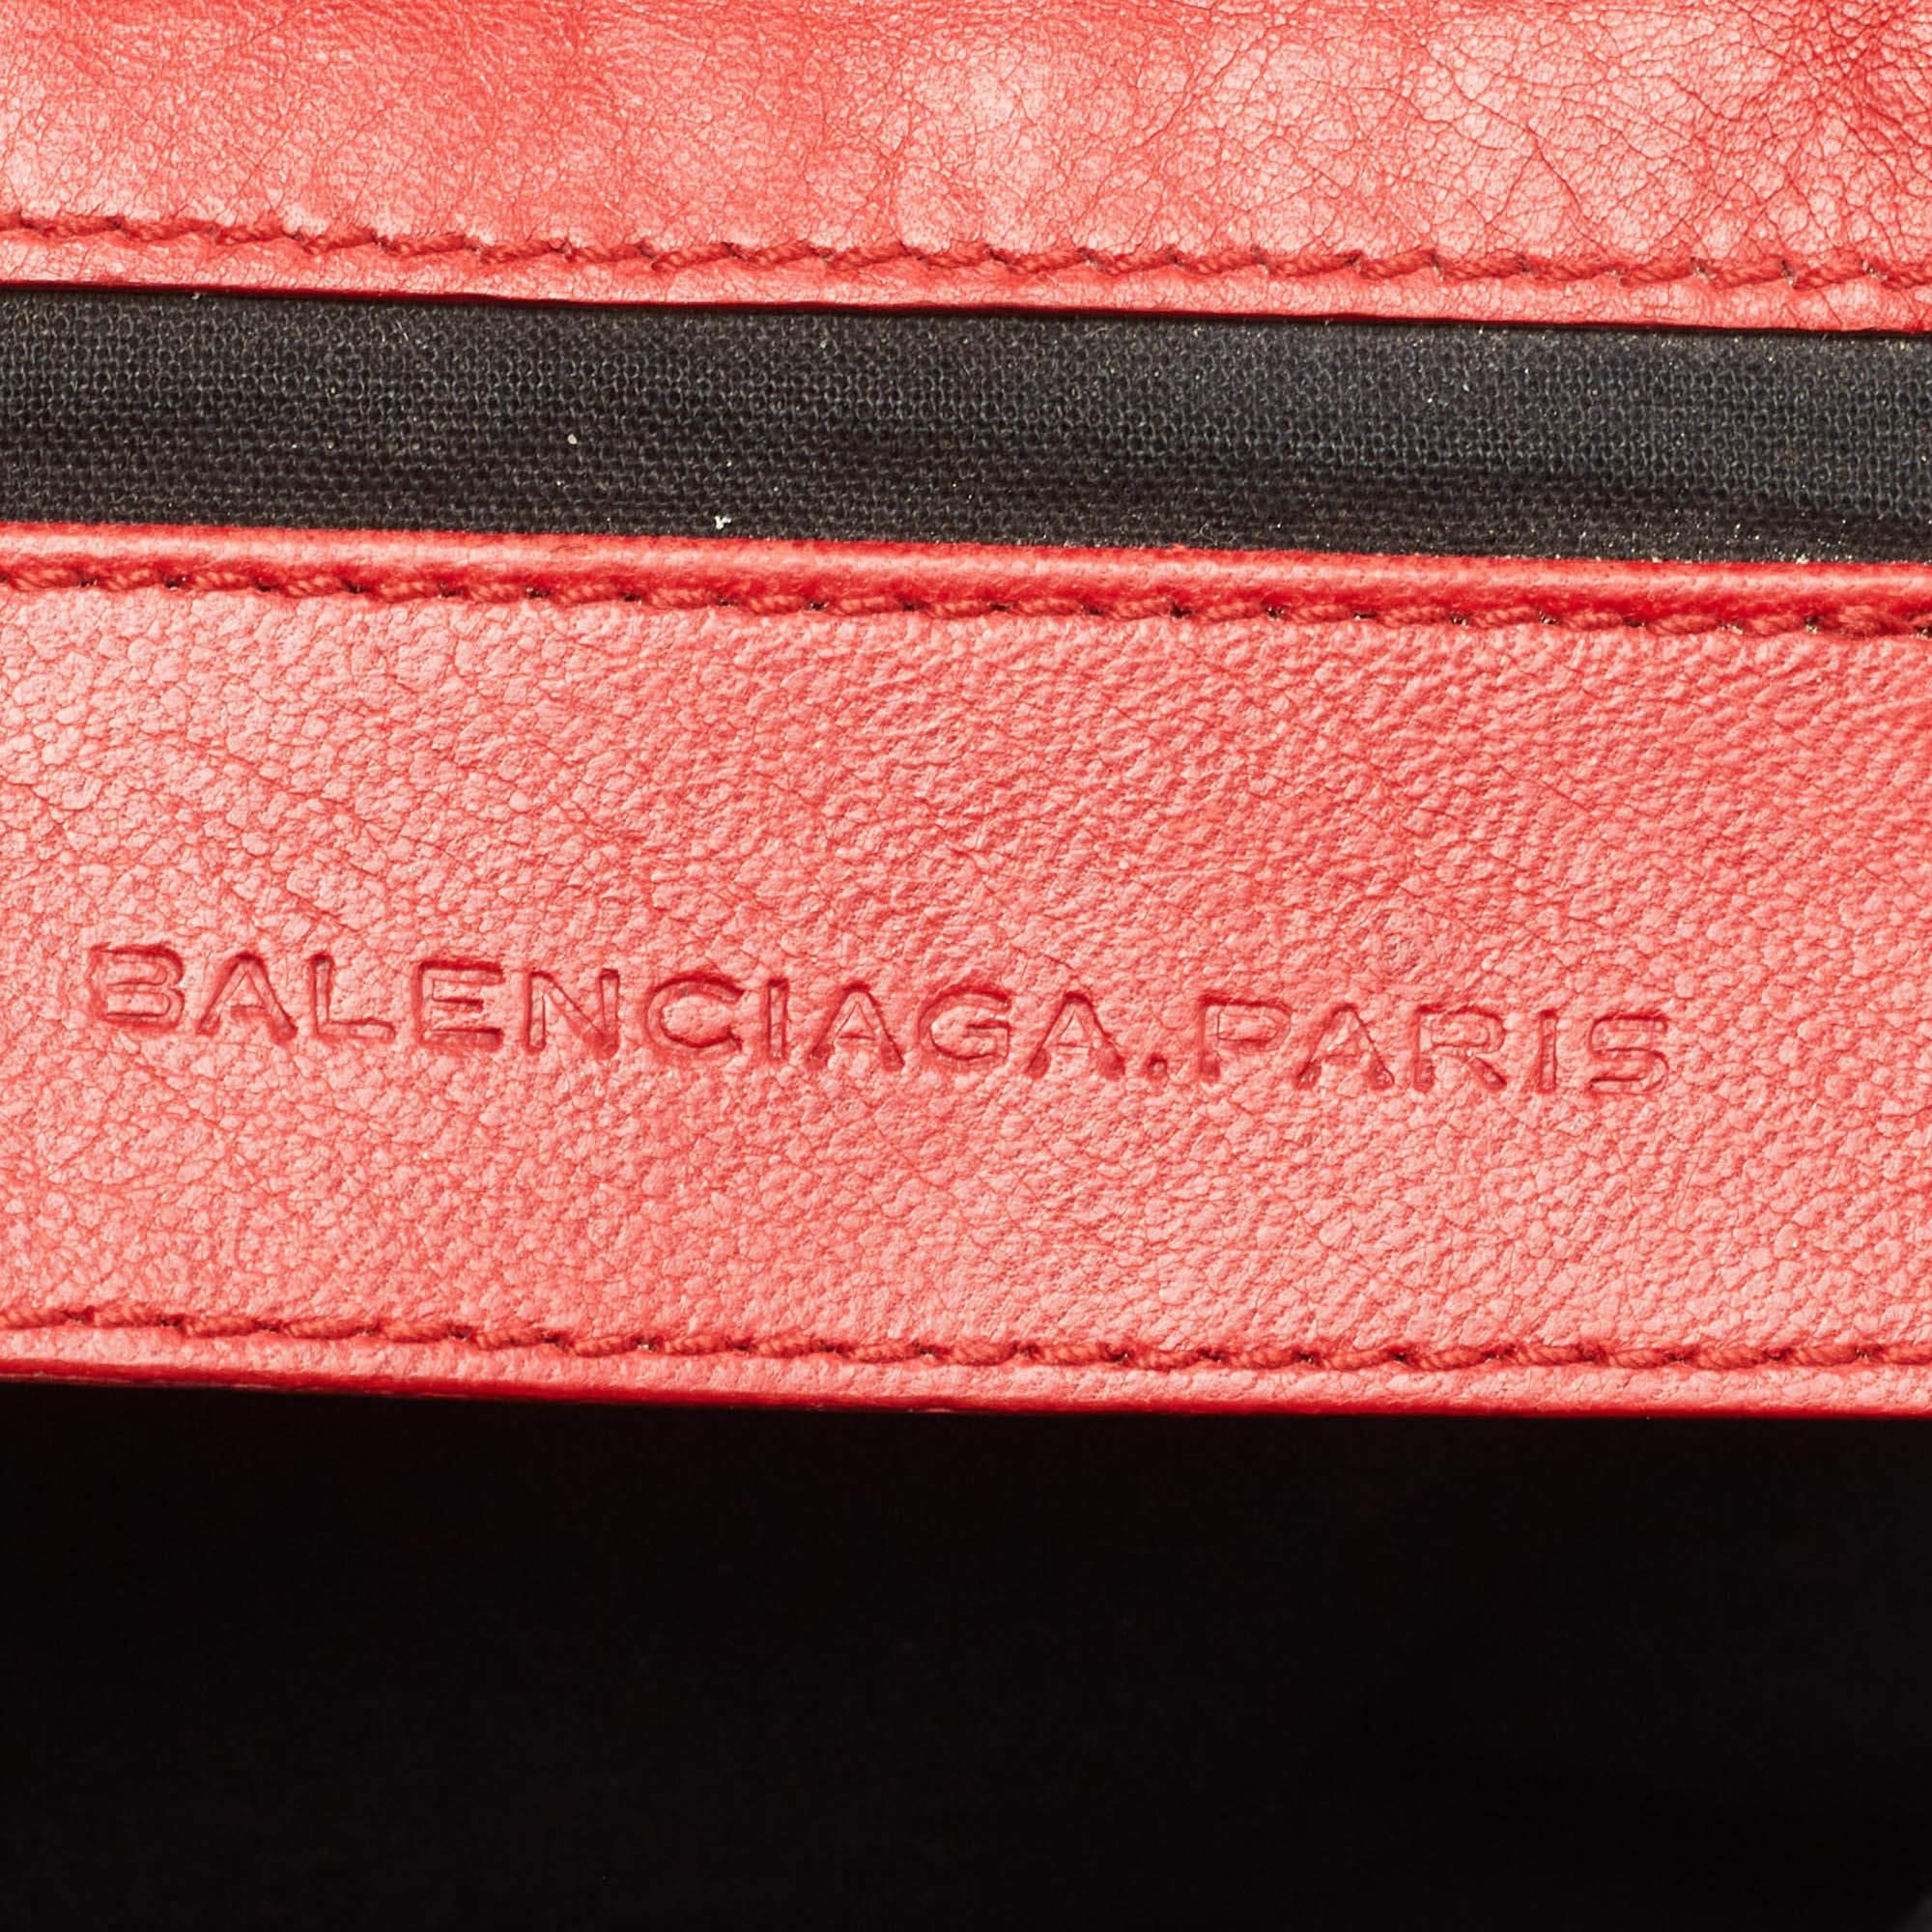 Balenciaga Orange Leather Classic Envelope Clutch 5